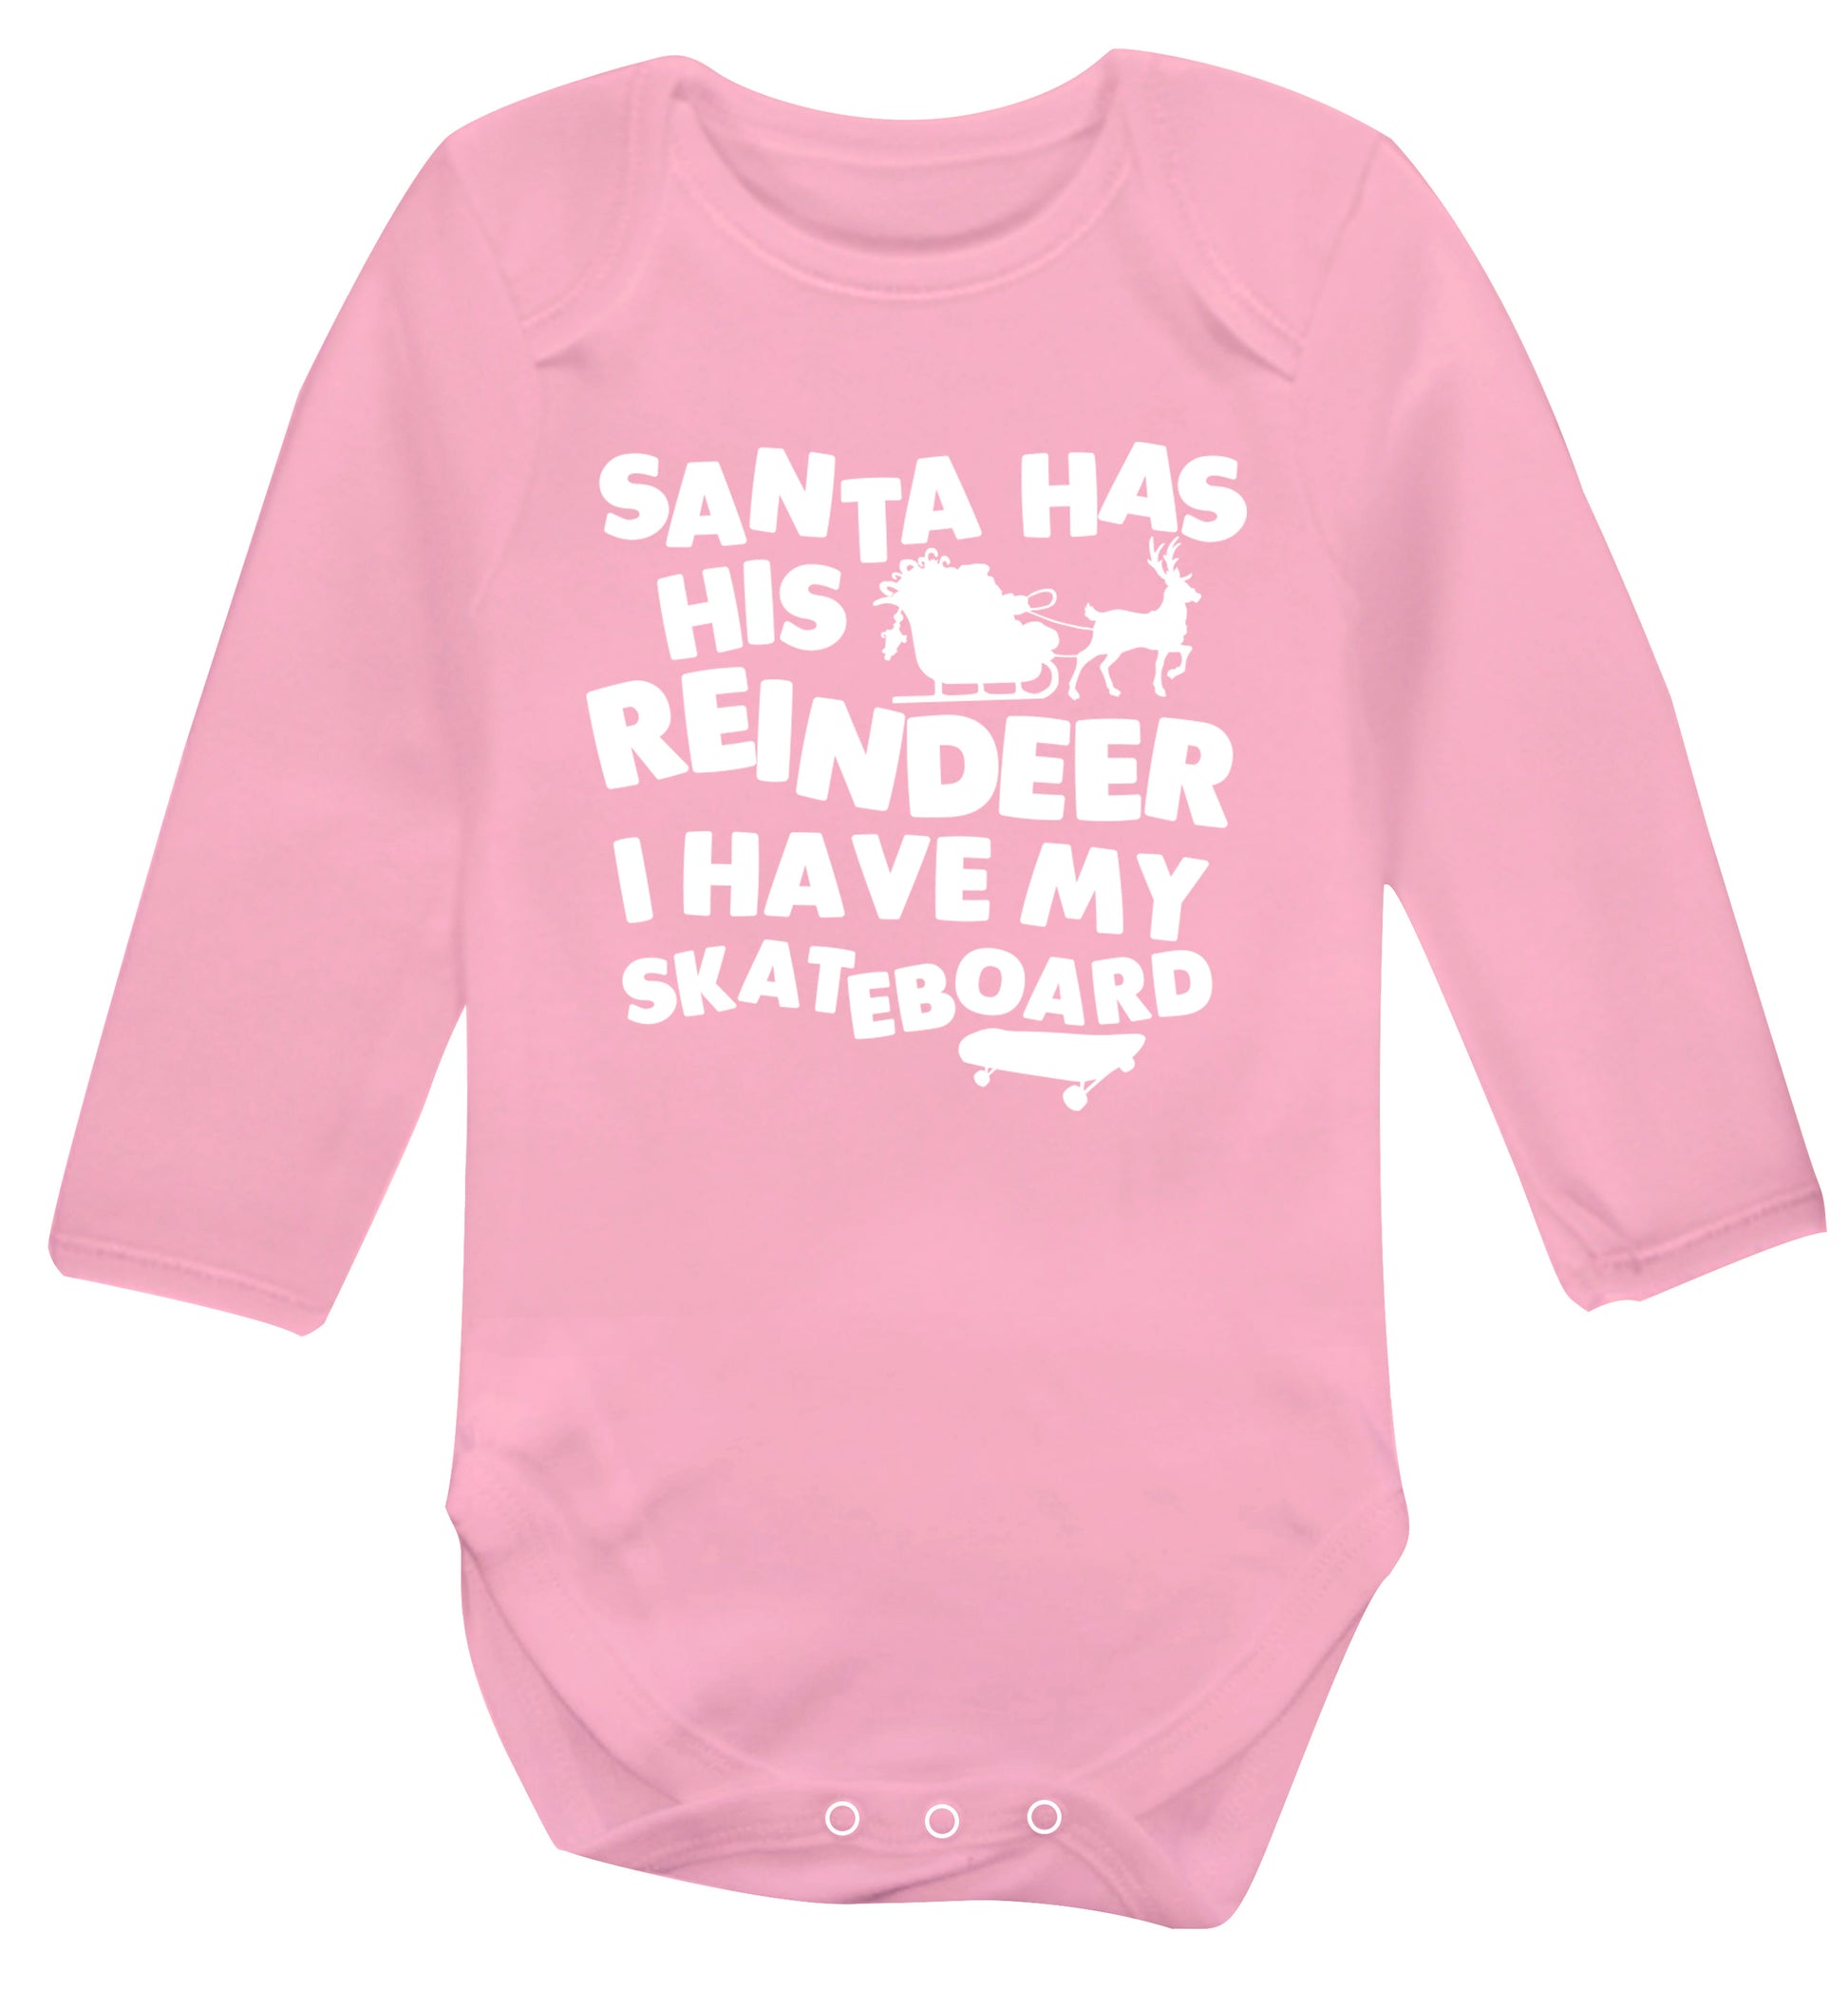 Santa has his reindeer I have my skateboard Baby Vest long sleeved pale pink 6-12 months